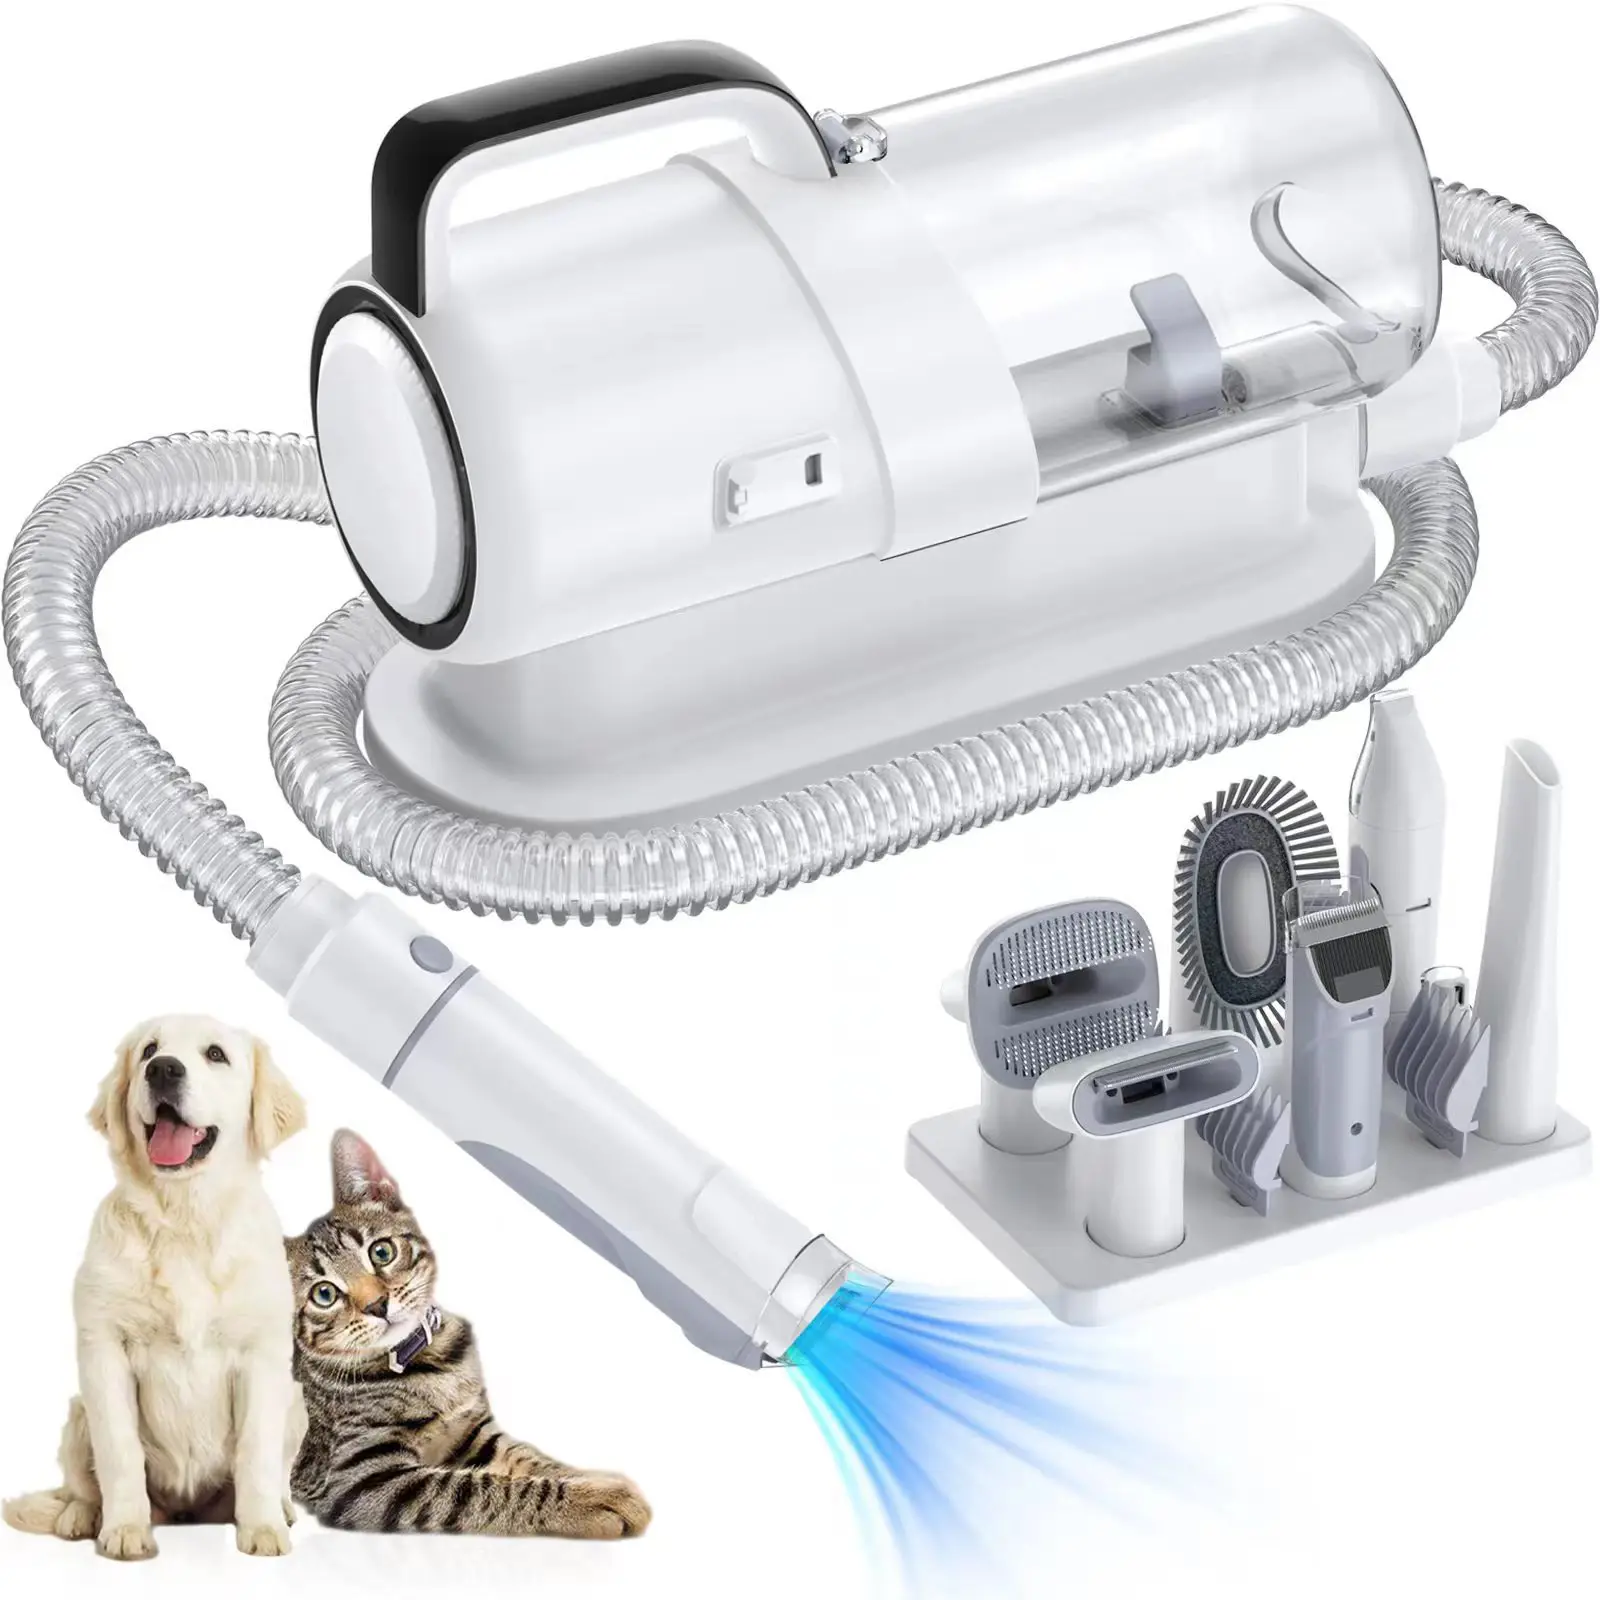 Multi-fungsi listrik anjing kucing mengapung pembersih rambut hewan peliharaan clipper kit perawatan dan vakum